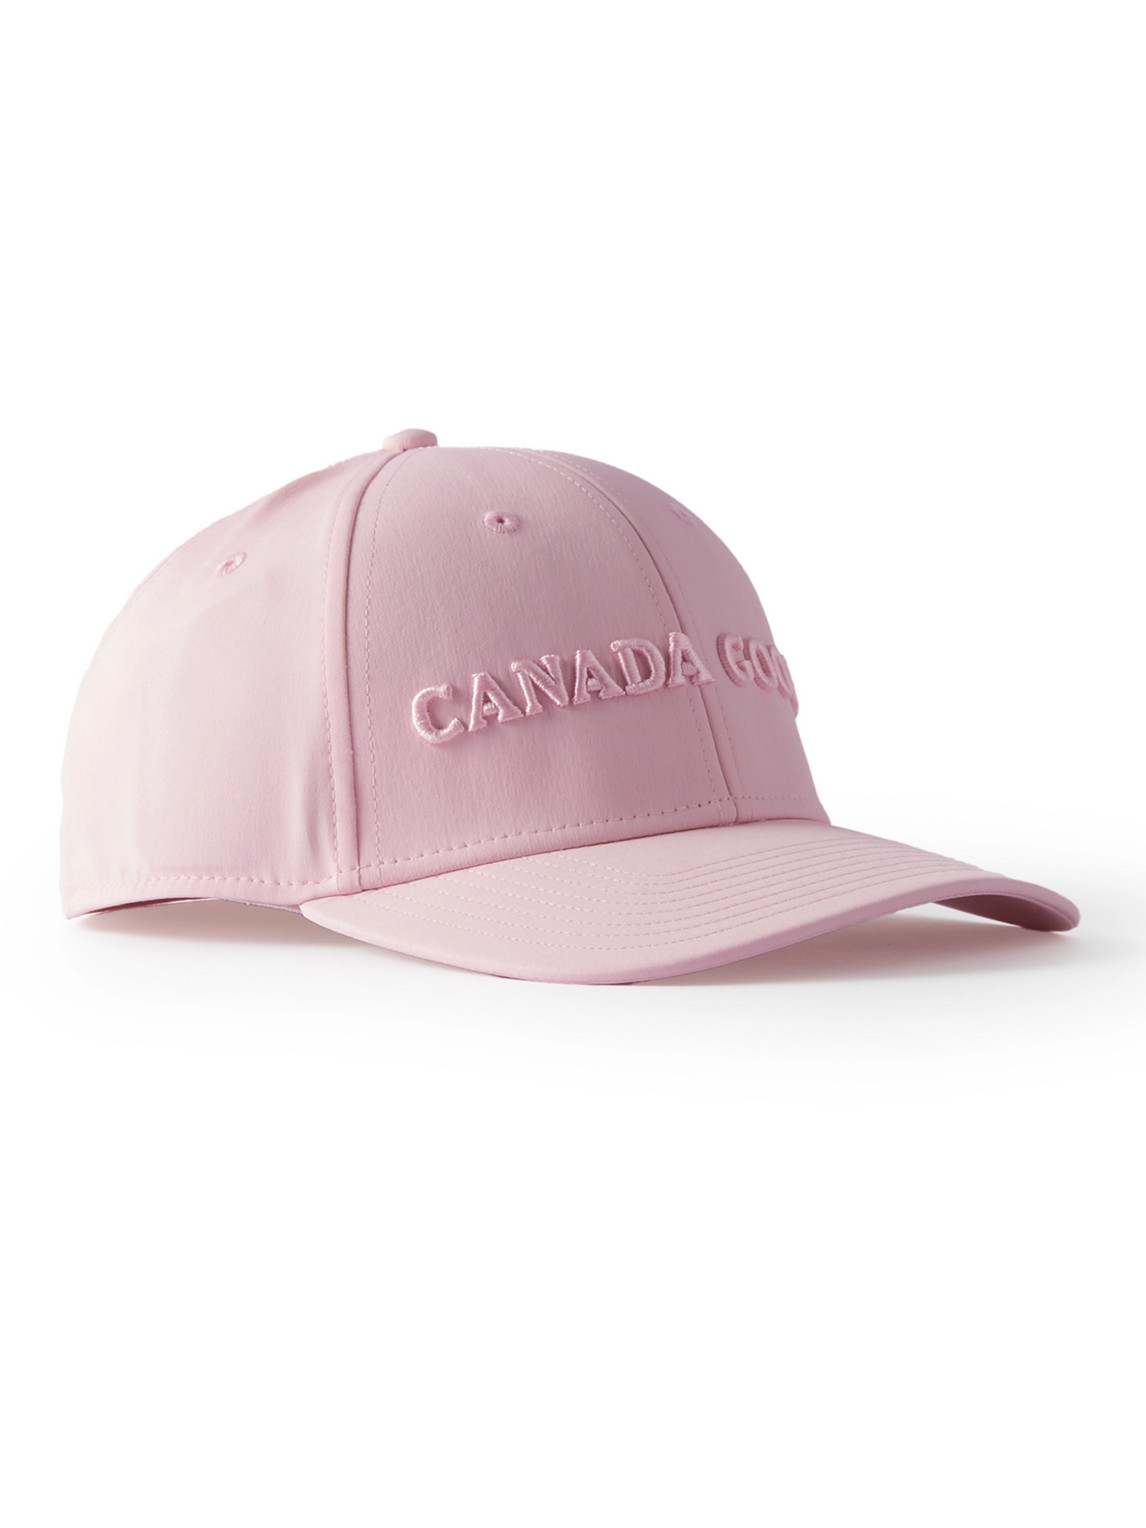 Canada Goose - Logo-Embroidered Cotton-Blend Canvas Baseball Cap - Men - Pink - S/M von Canada Goose